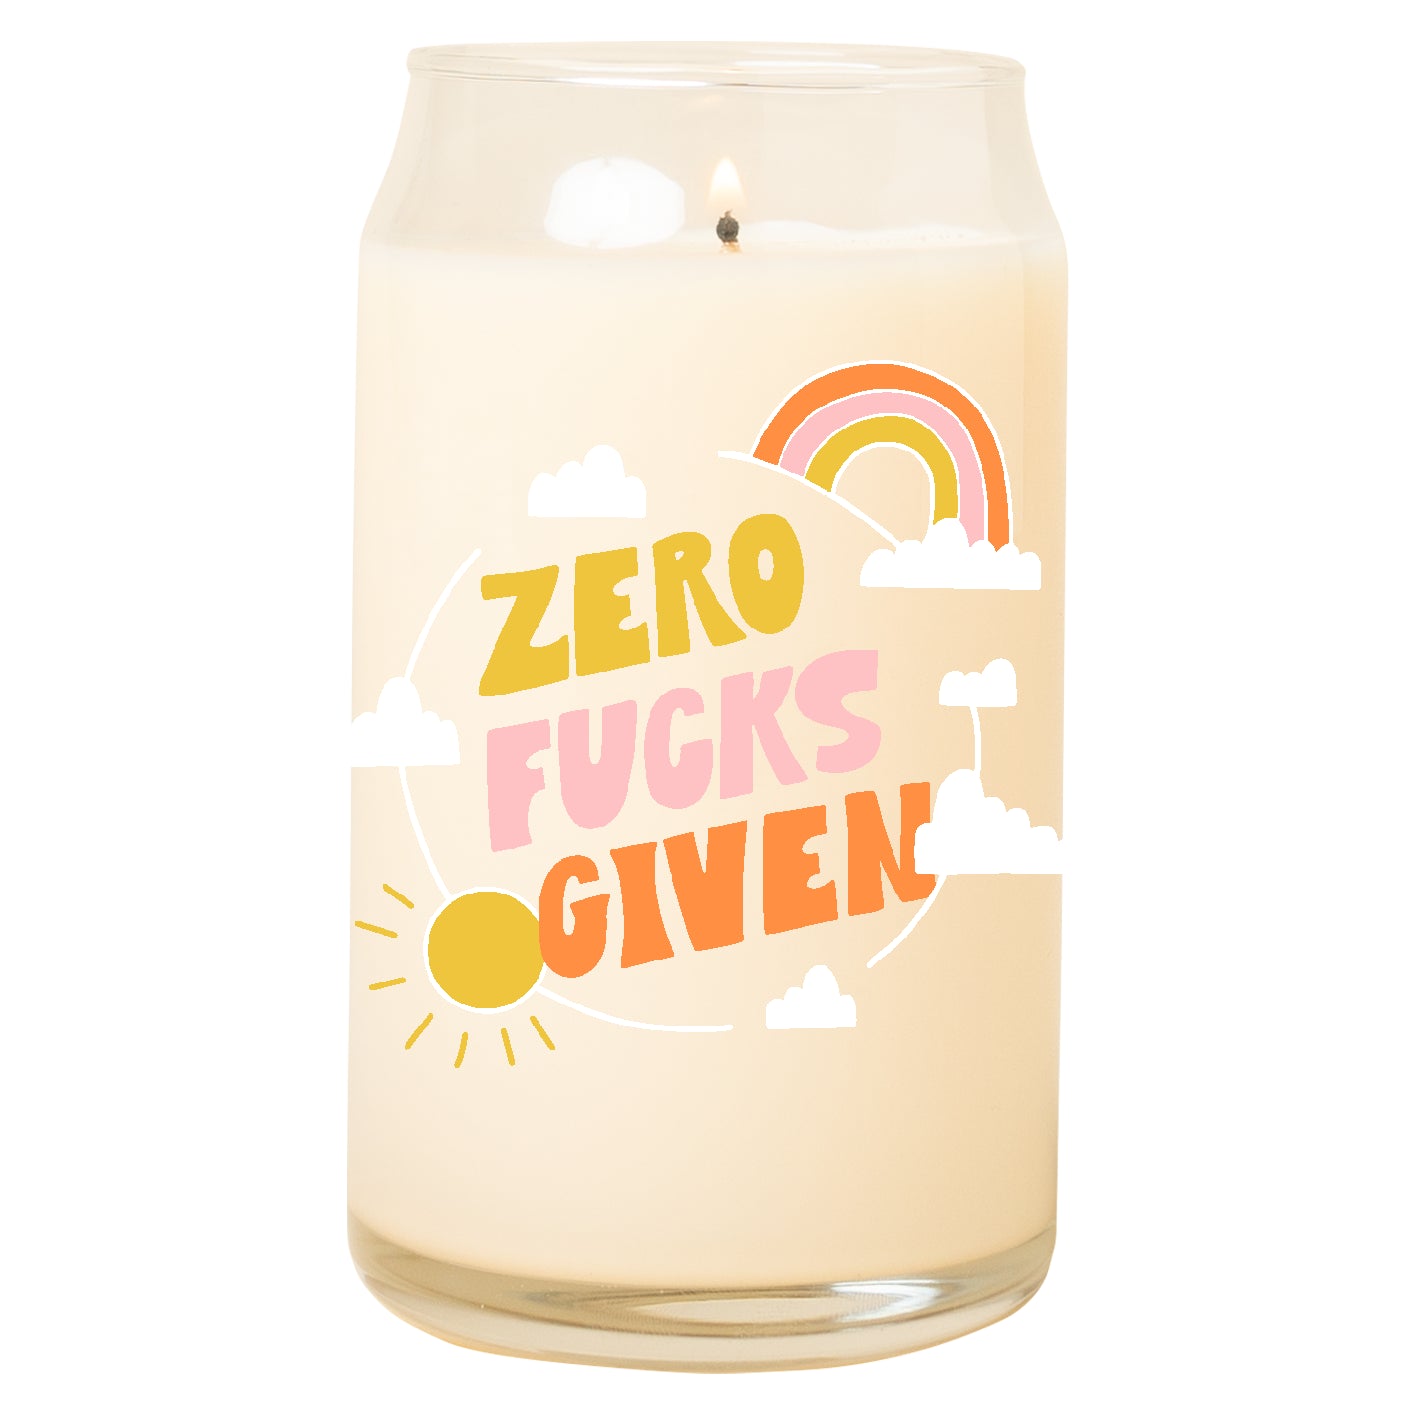 Zero Fucks Candle